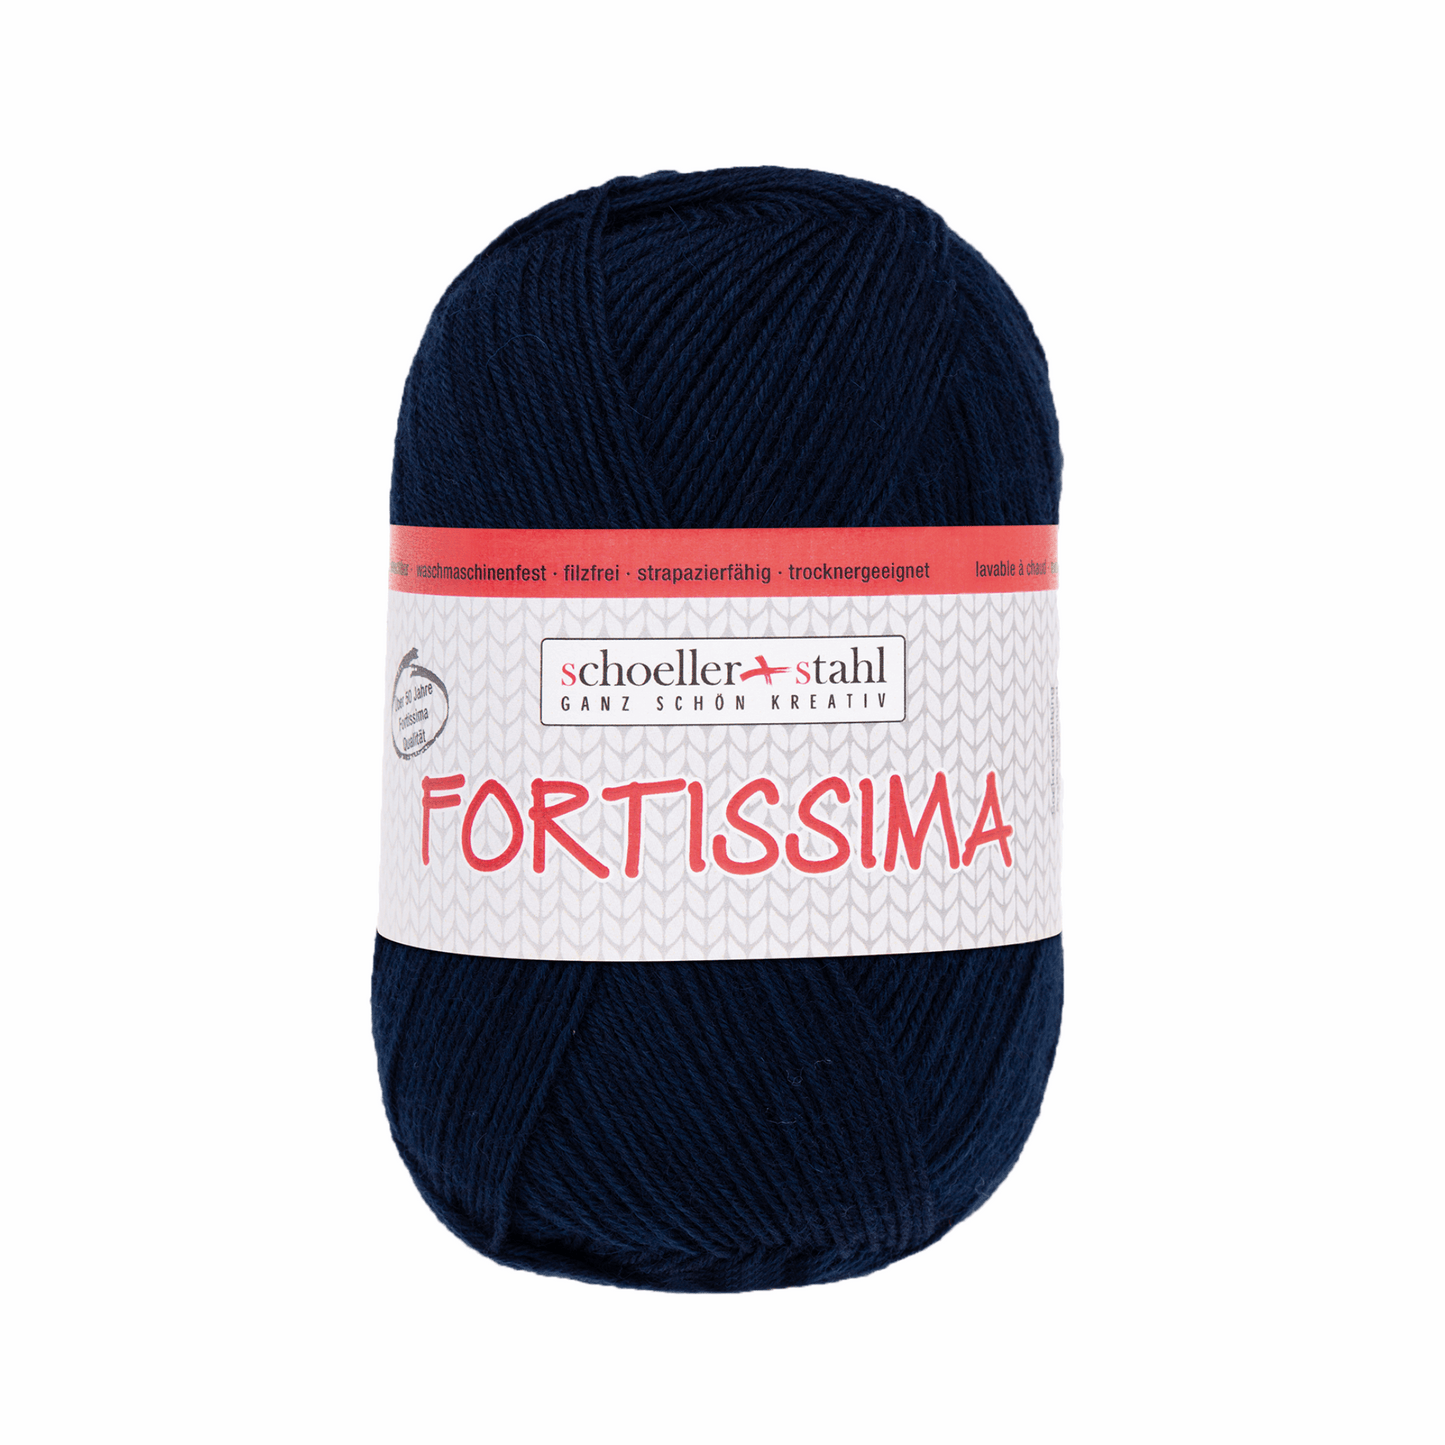 Fortissima socka 100, 90038, Farbe 2040, nachtblau